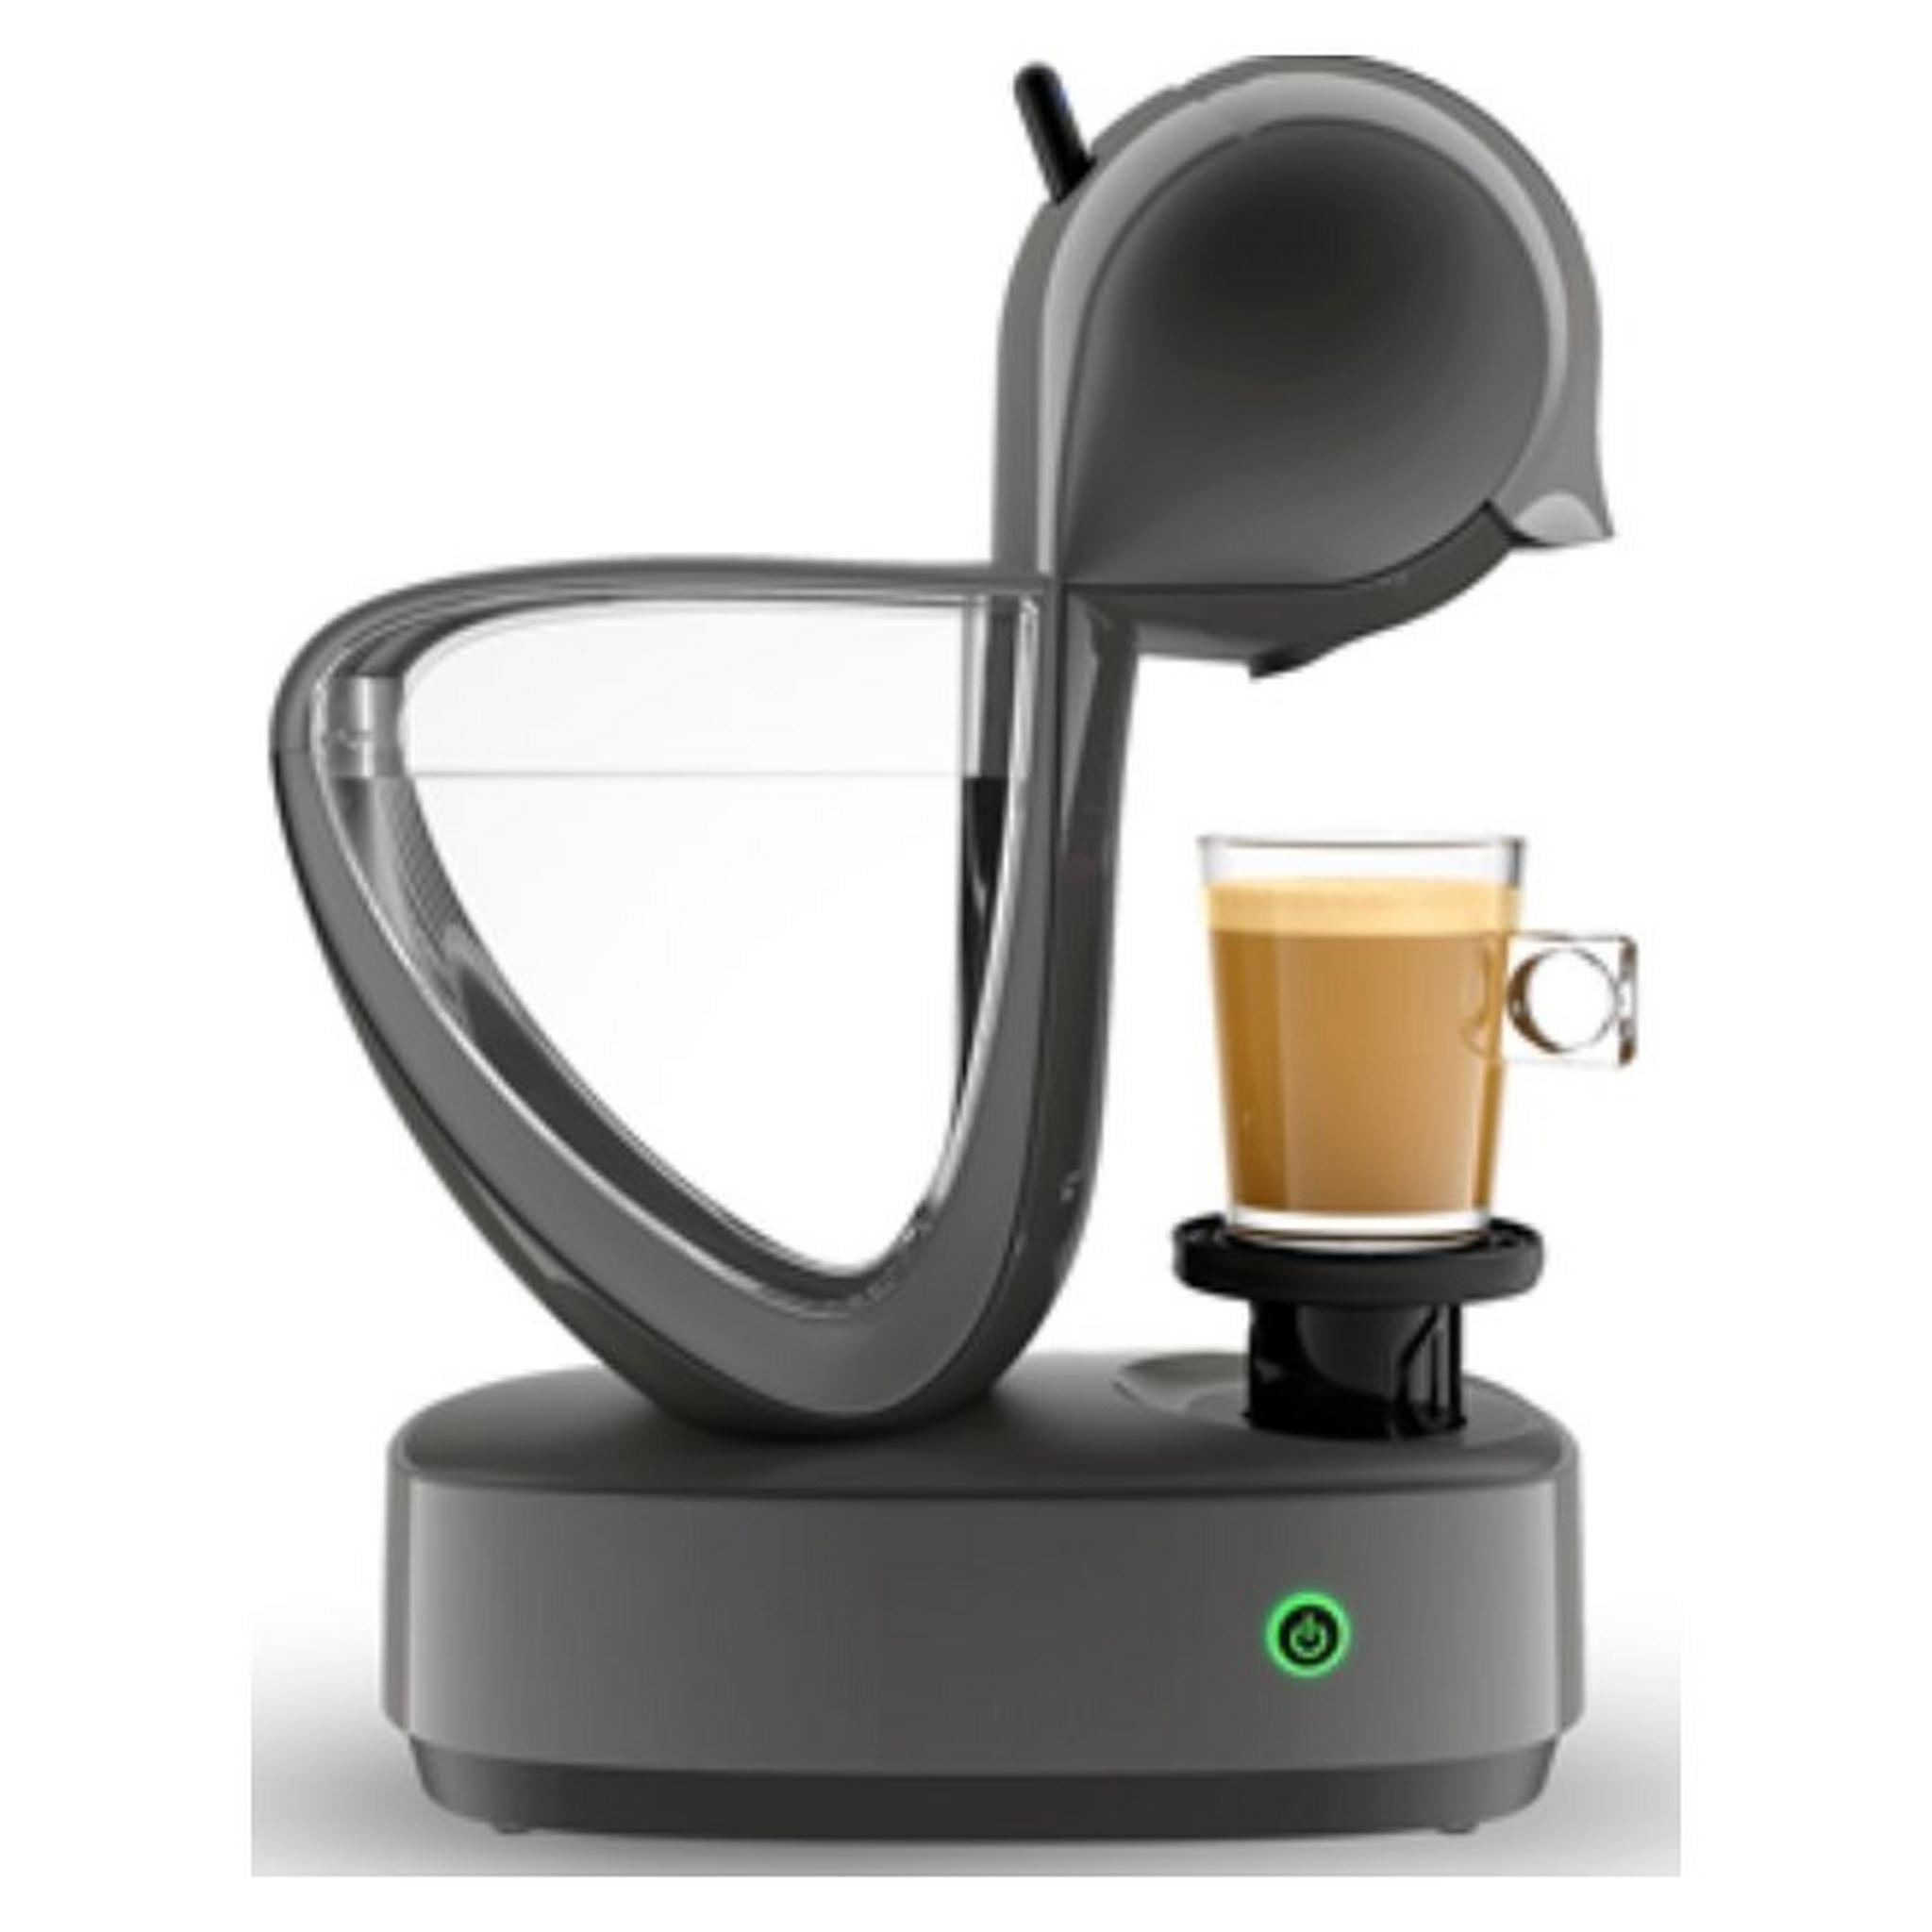 Delonghi Dolce Gusto Coffee Maker, 1500W, 1.2L, EDG268.GY - Silver